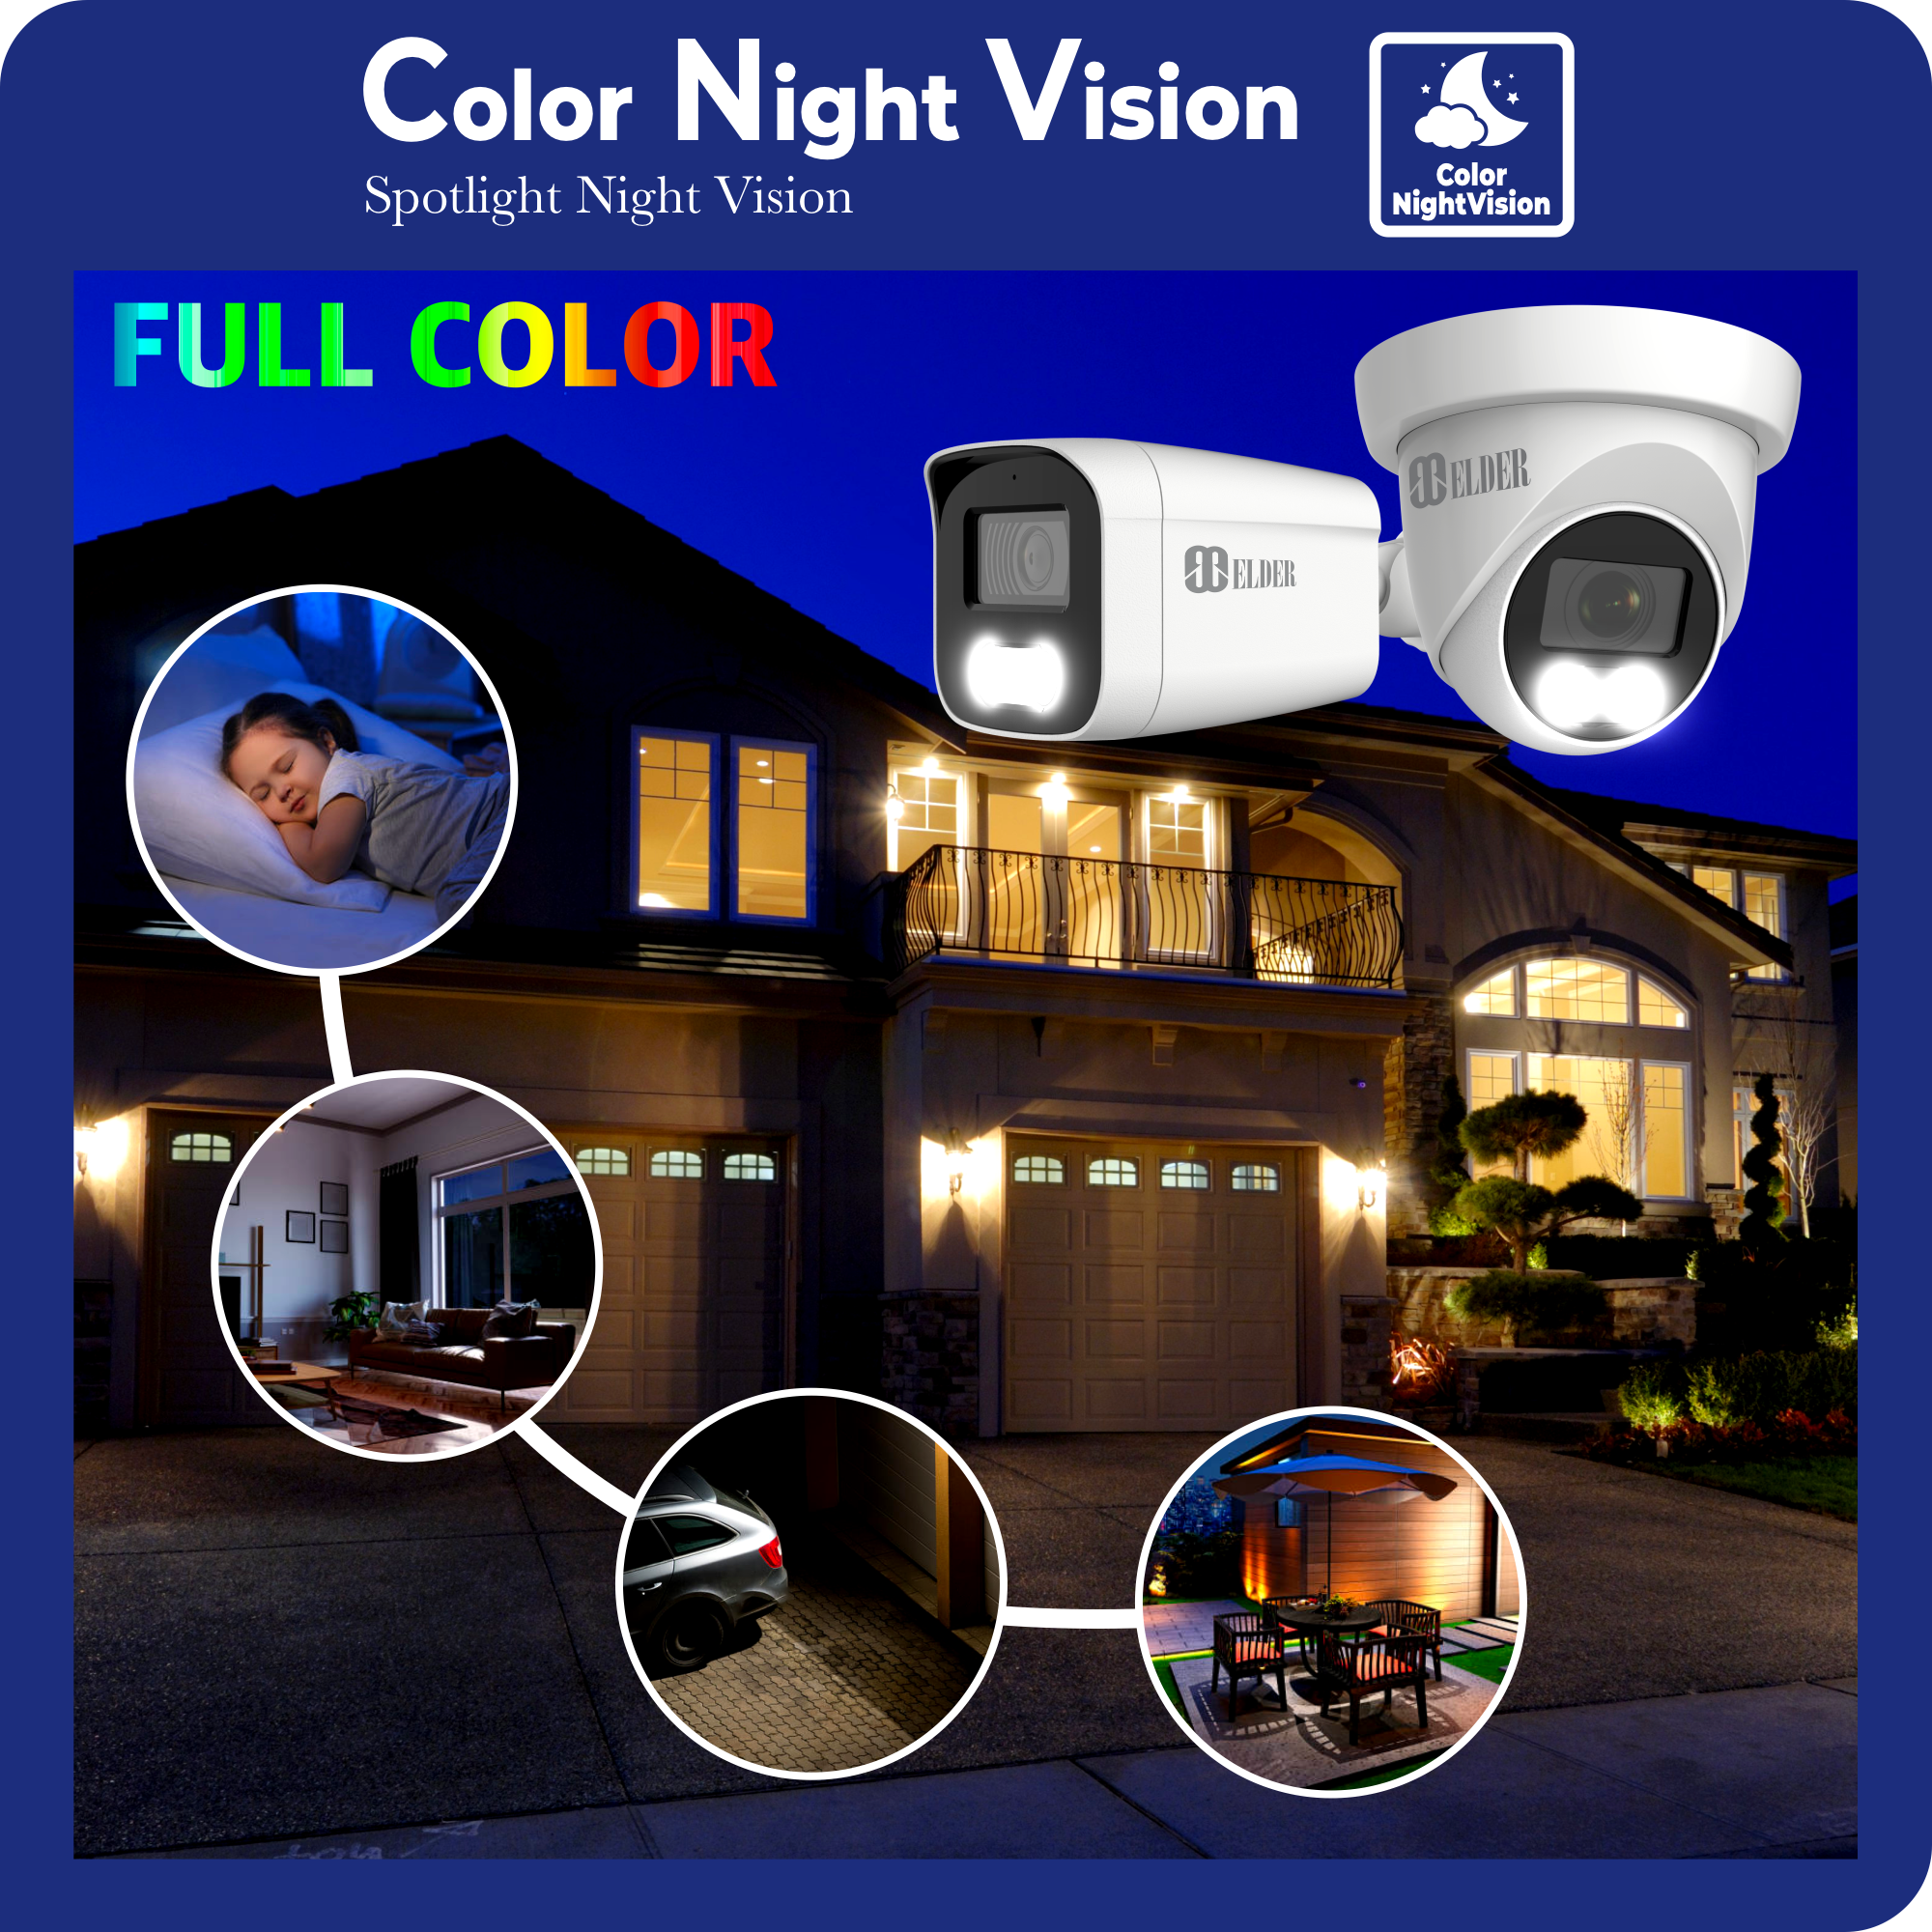 4K Security Camera System Color Night Vision Spotlight, DVR Surveillance Kit Outdoor Wired DIY, Listen-in Audio, 6-Camera Dome & Bullet